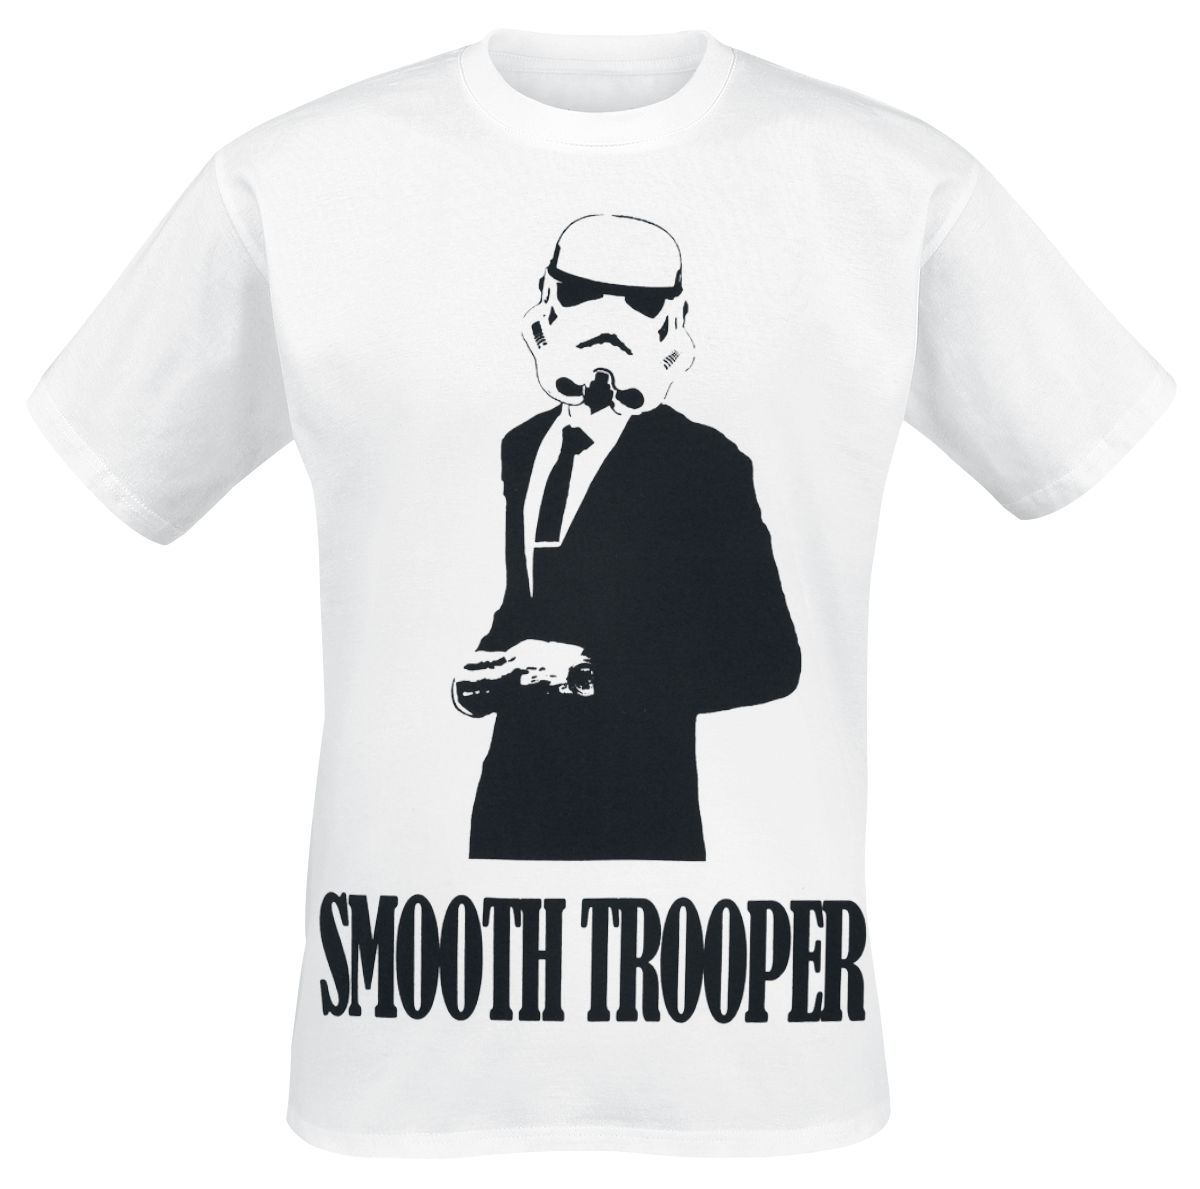 Original Stormtrooper - Smooth Trooper - T-Shirt - white image